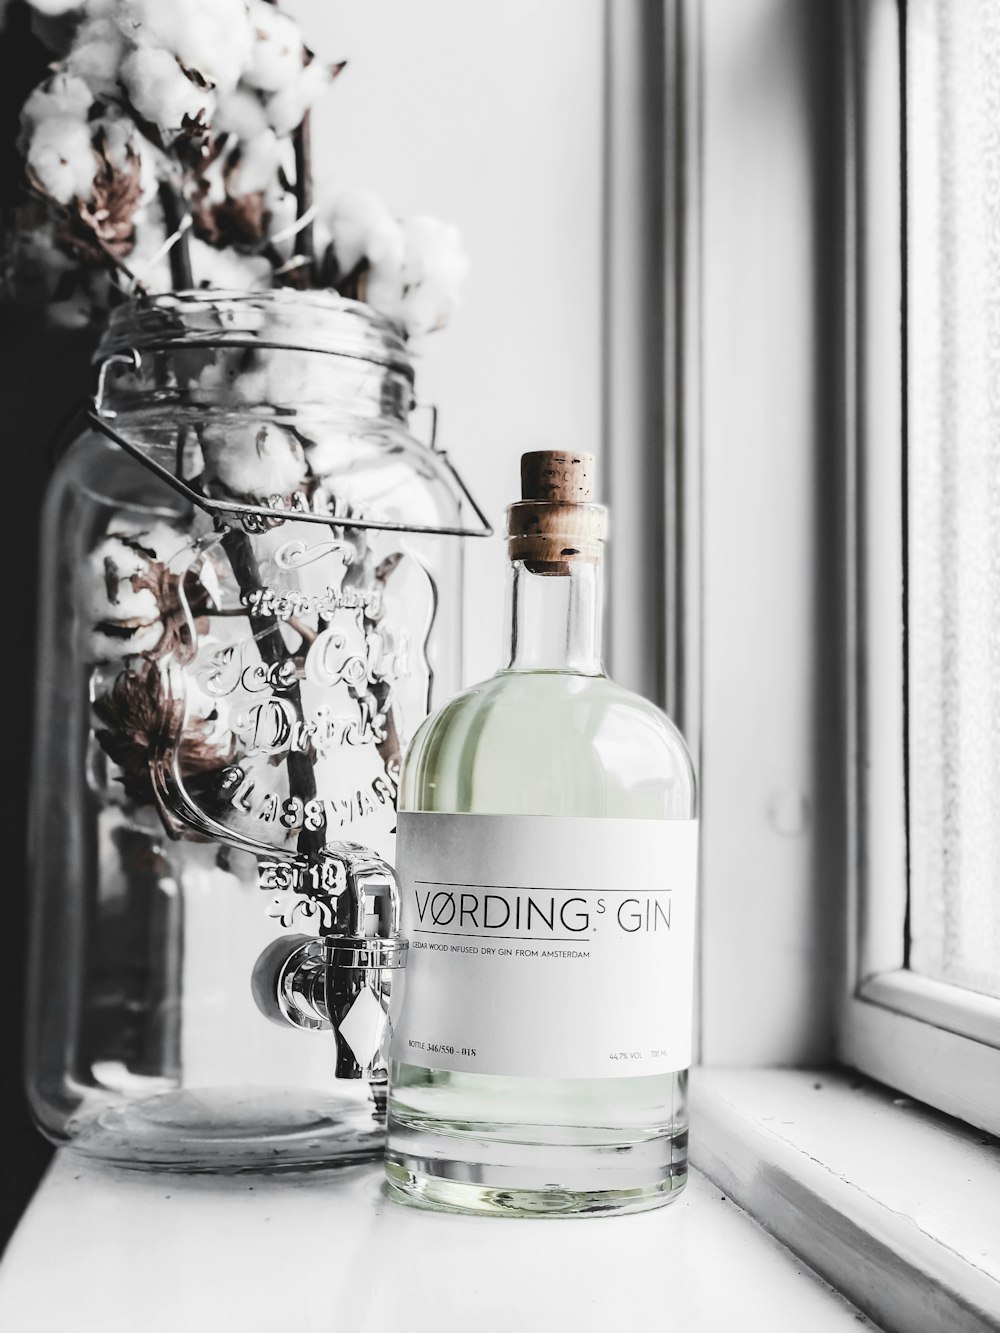 a bottle of wodding gin sitting on a window sill